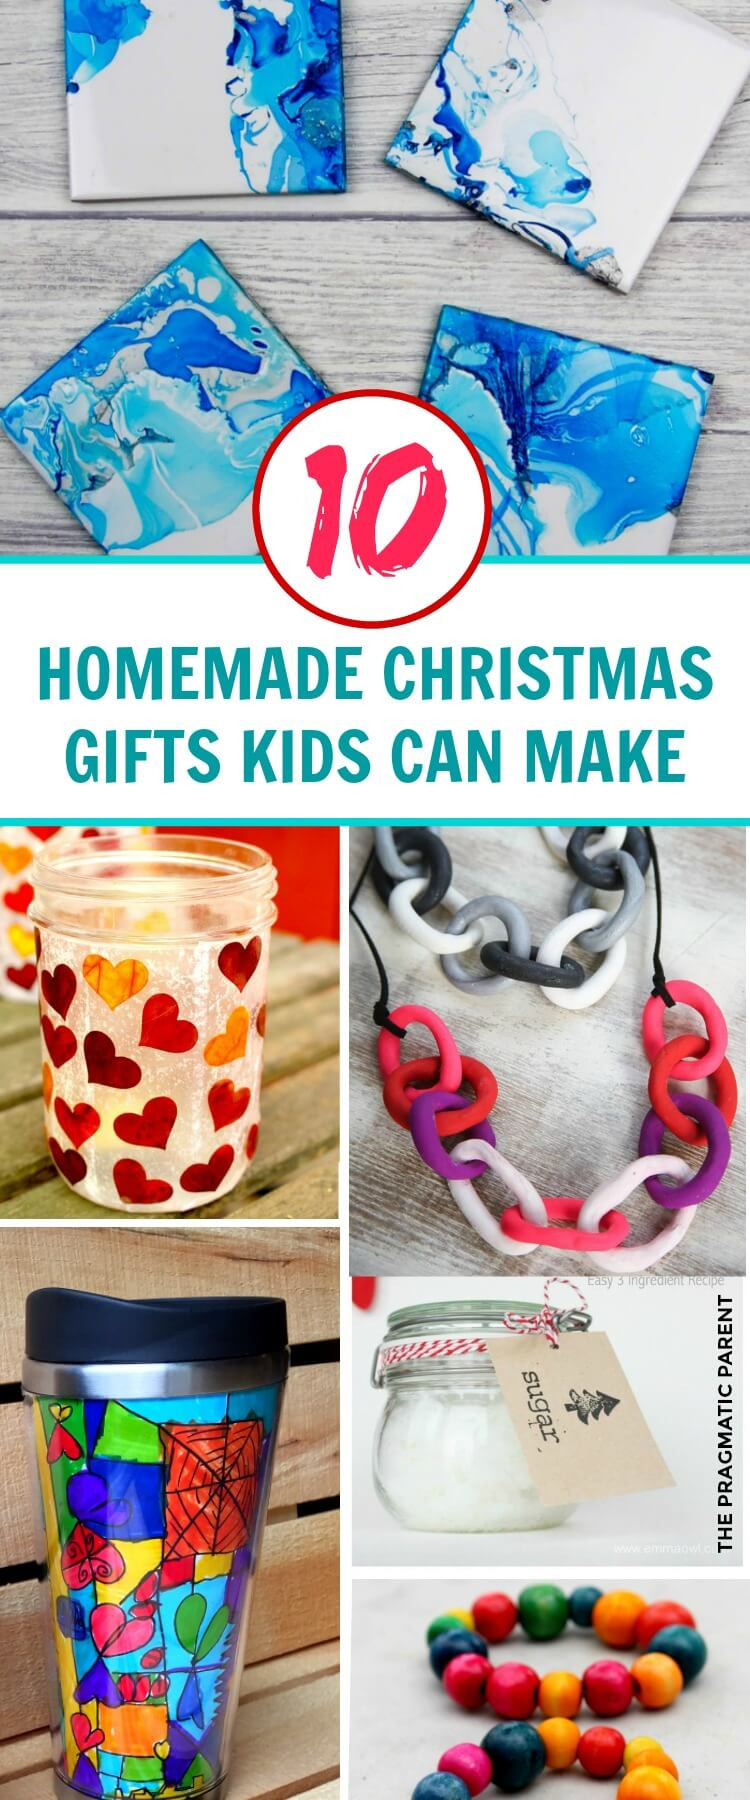 Homemade Christmas Gifts For Kids
 10 Beautiful Homemade Christmas Gifts Kids Can Make This 2020